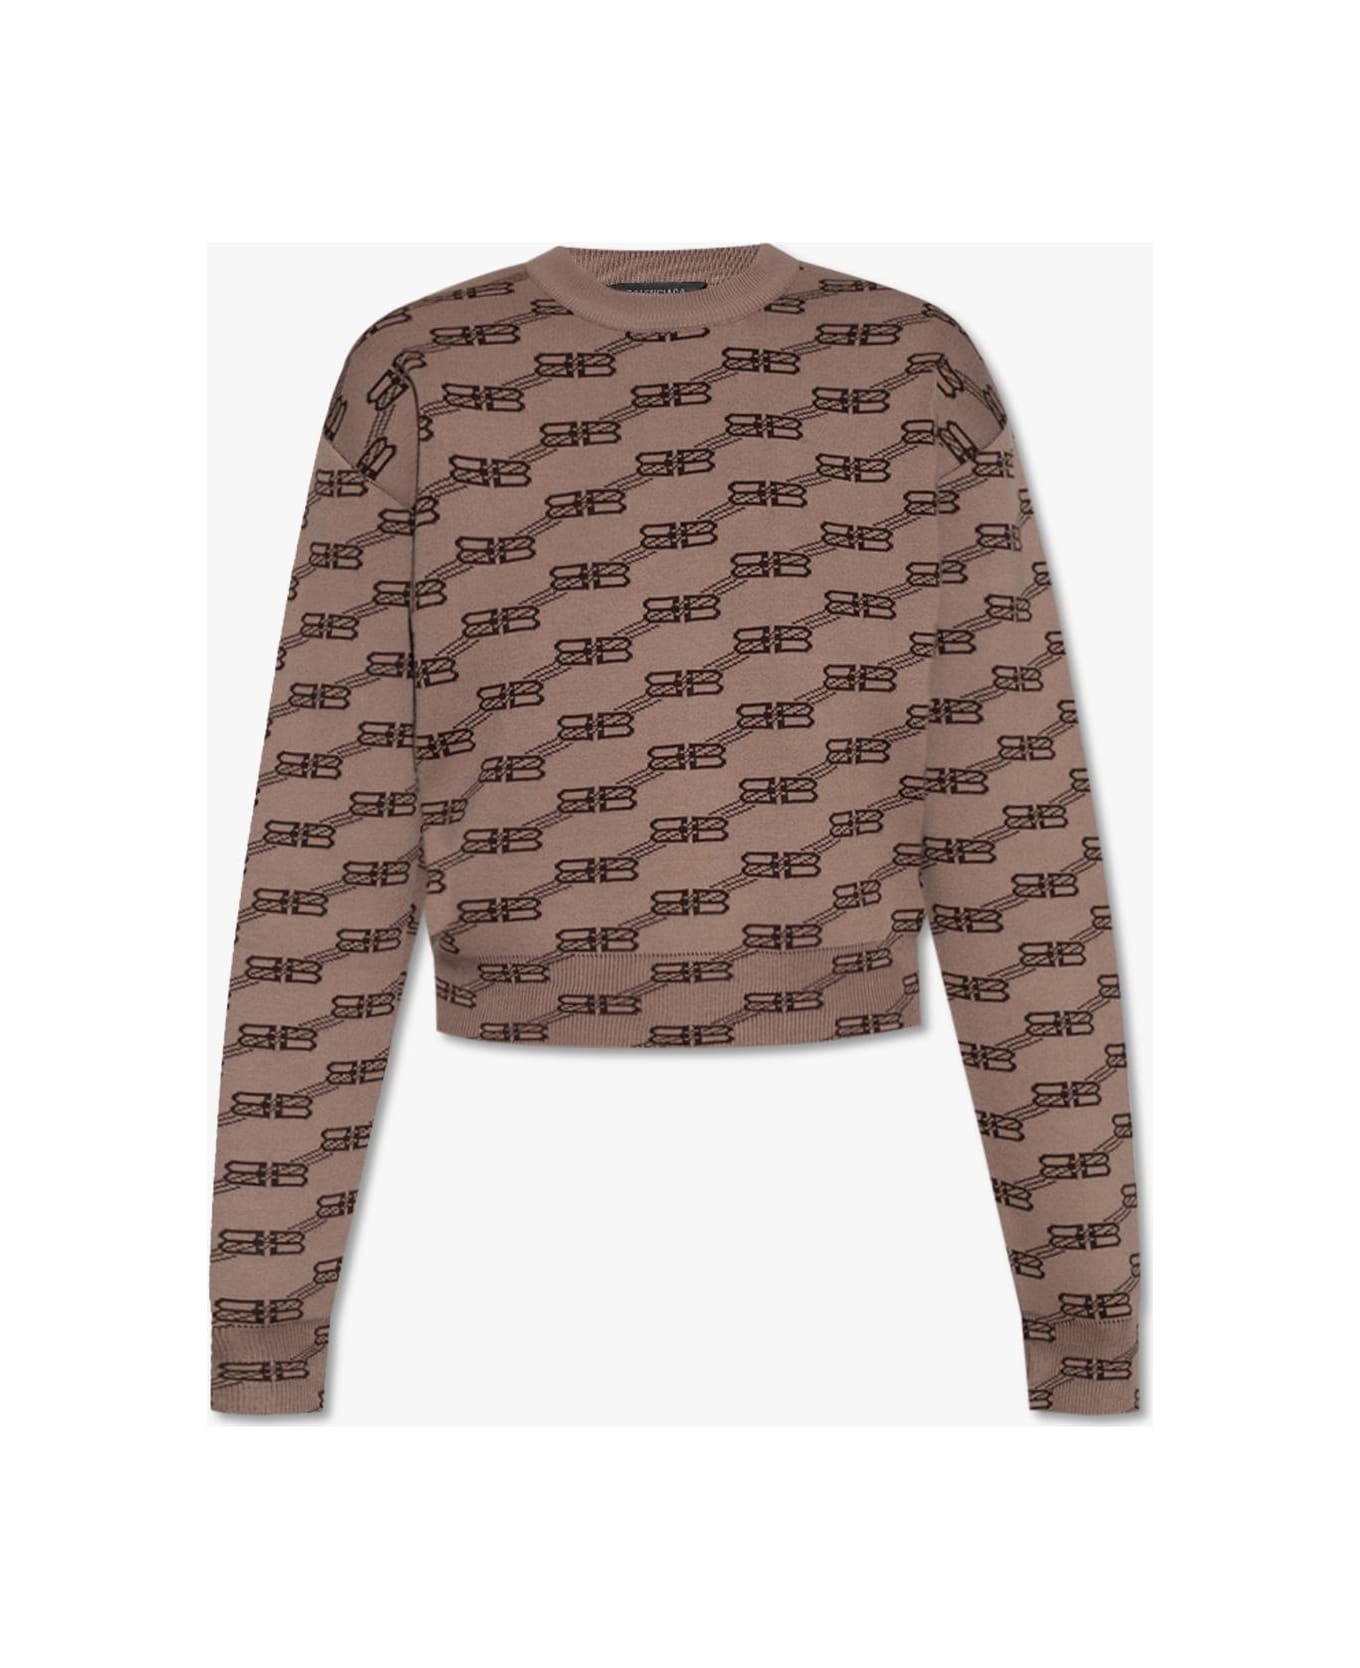 Balenciaga Sweater With Monogram - Beige/brown